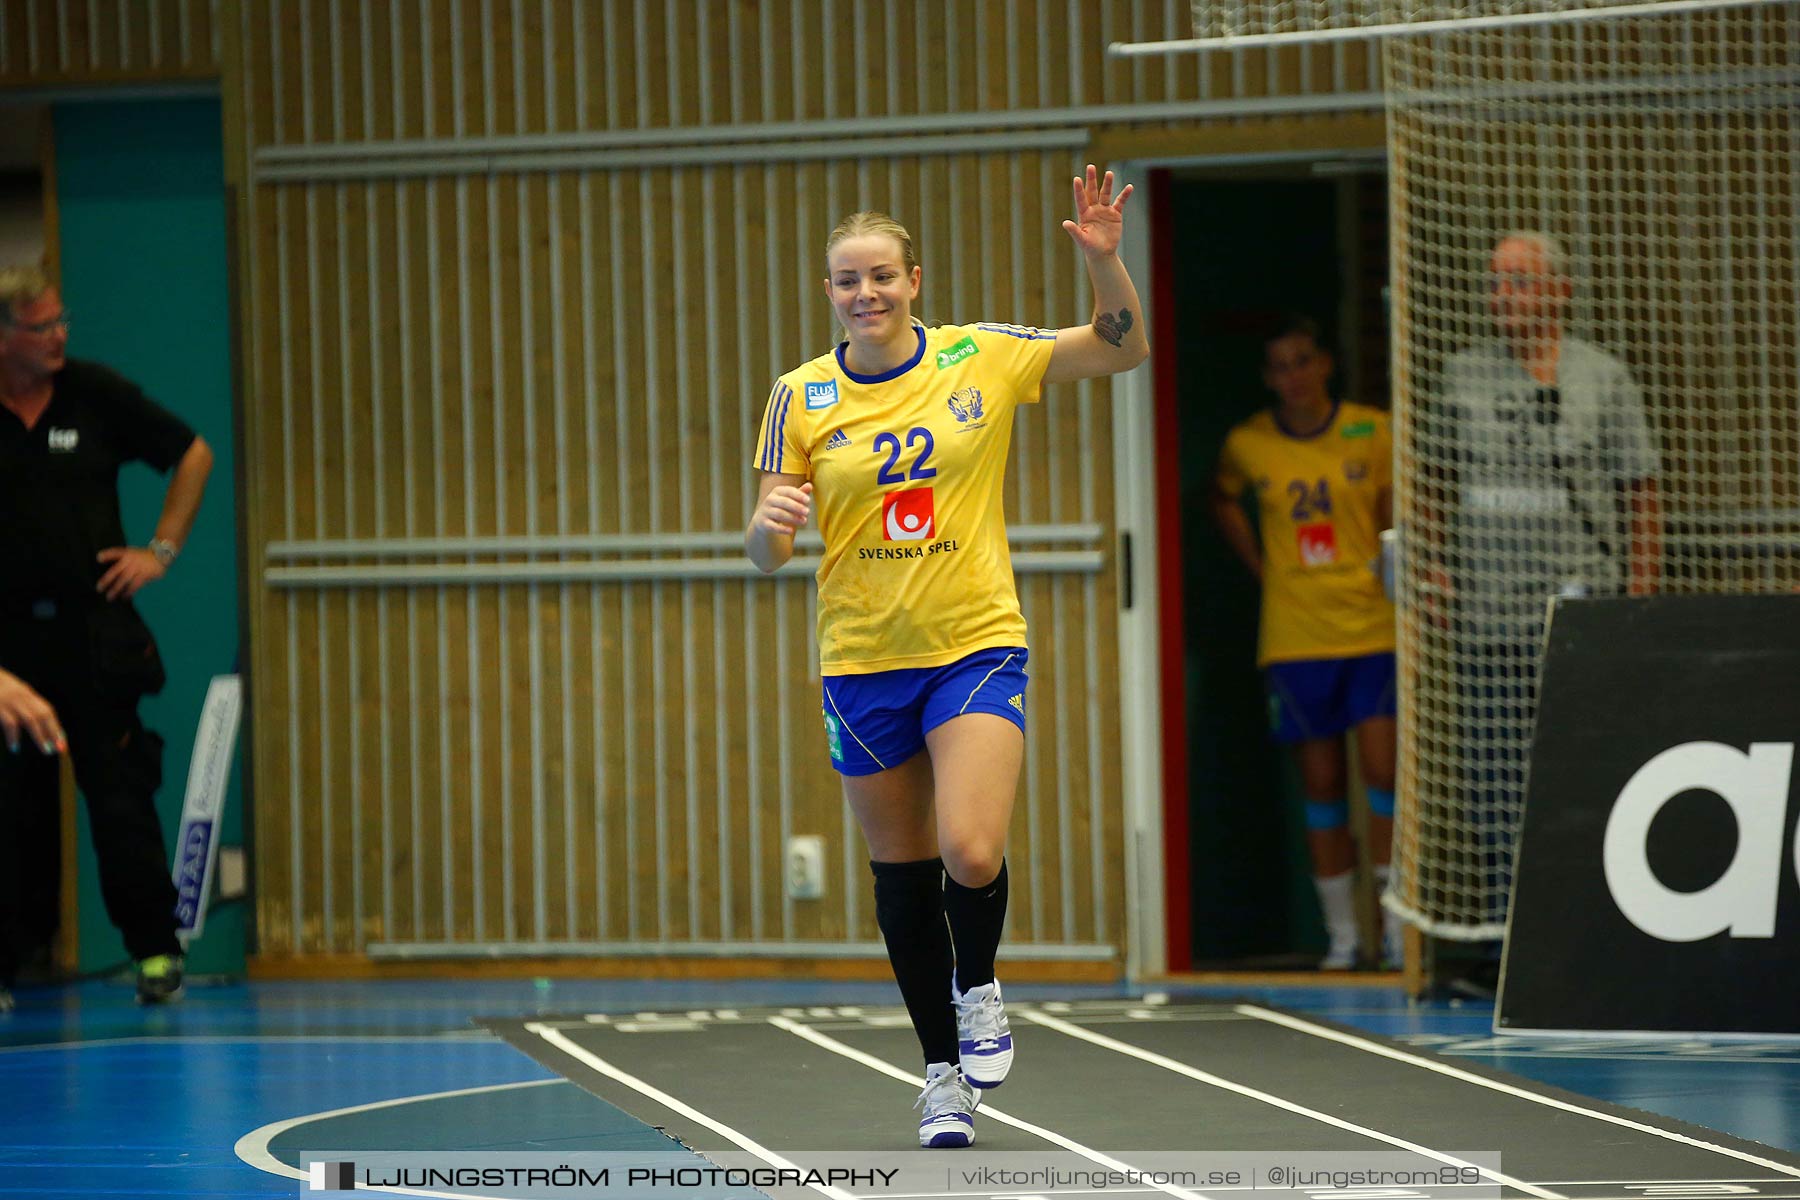 Landskamp Sverige-Island 32-24,dam,Arena Skövde,Skövde,Sverige,Handboll,,2014,150527